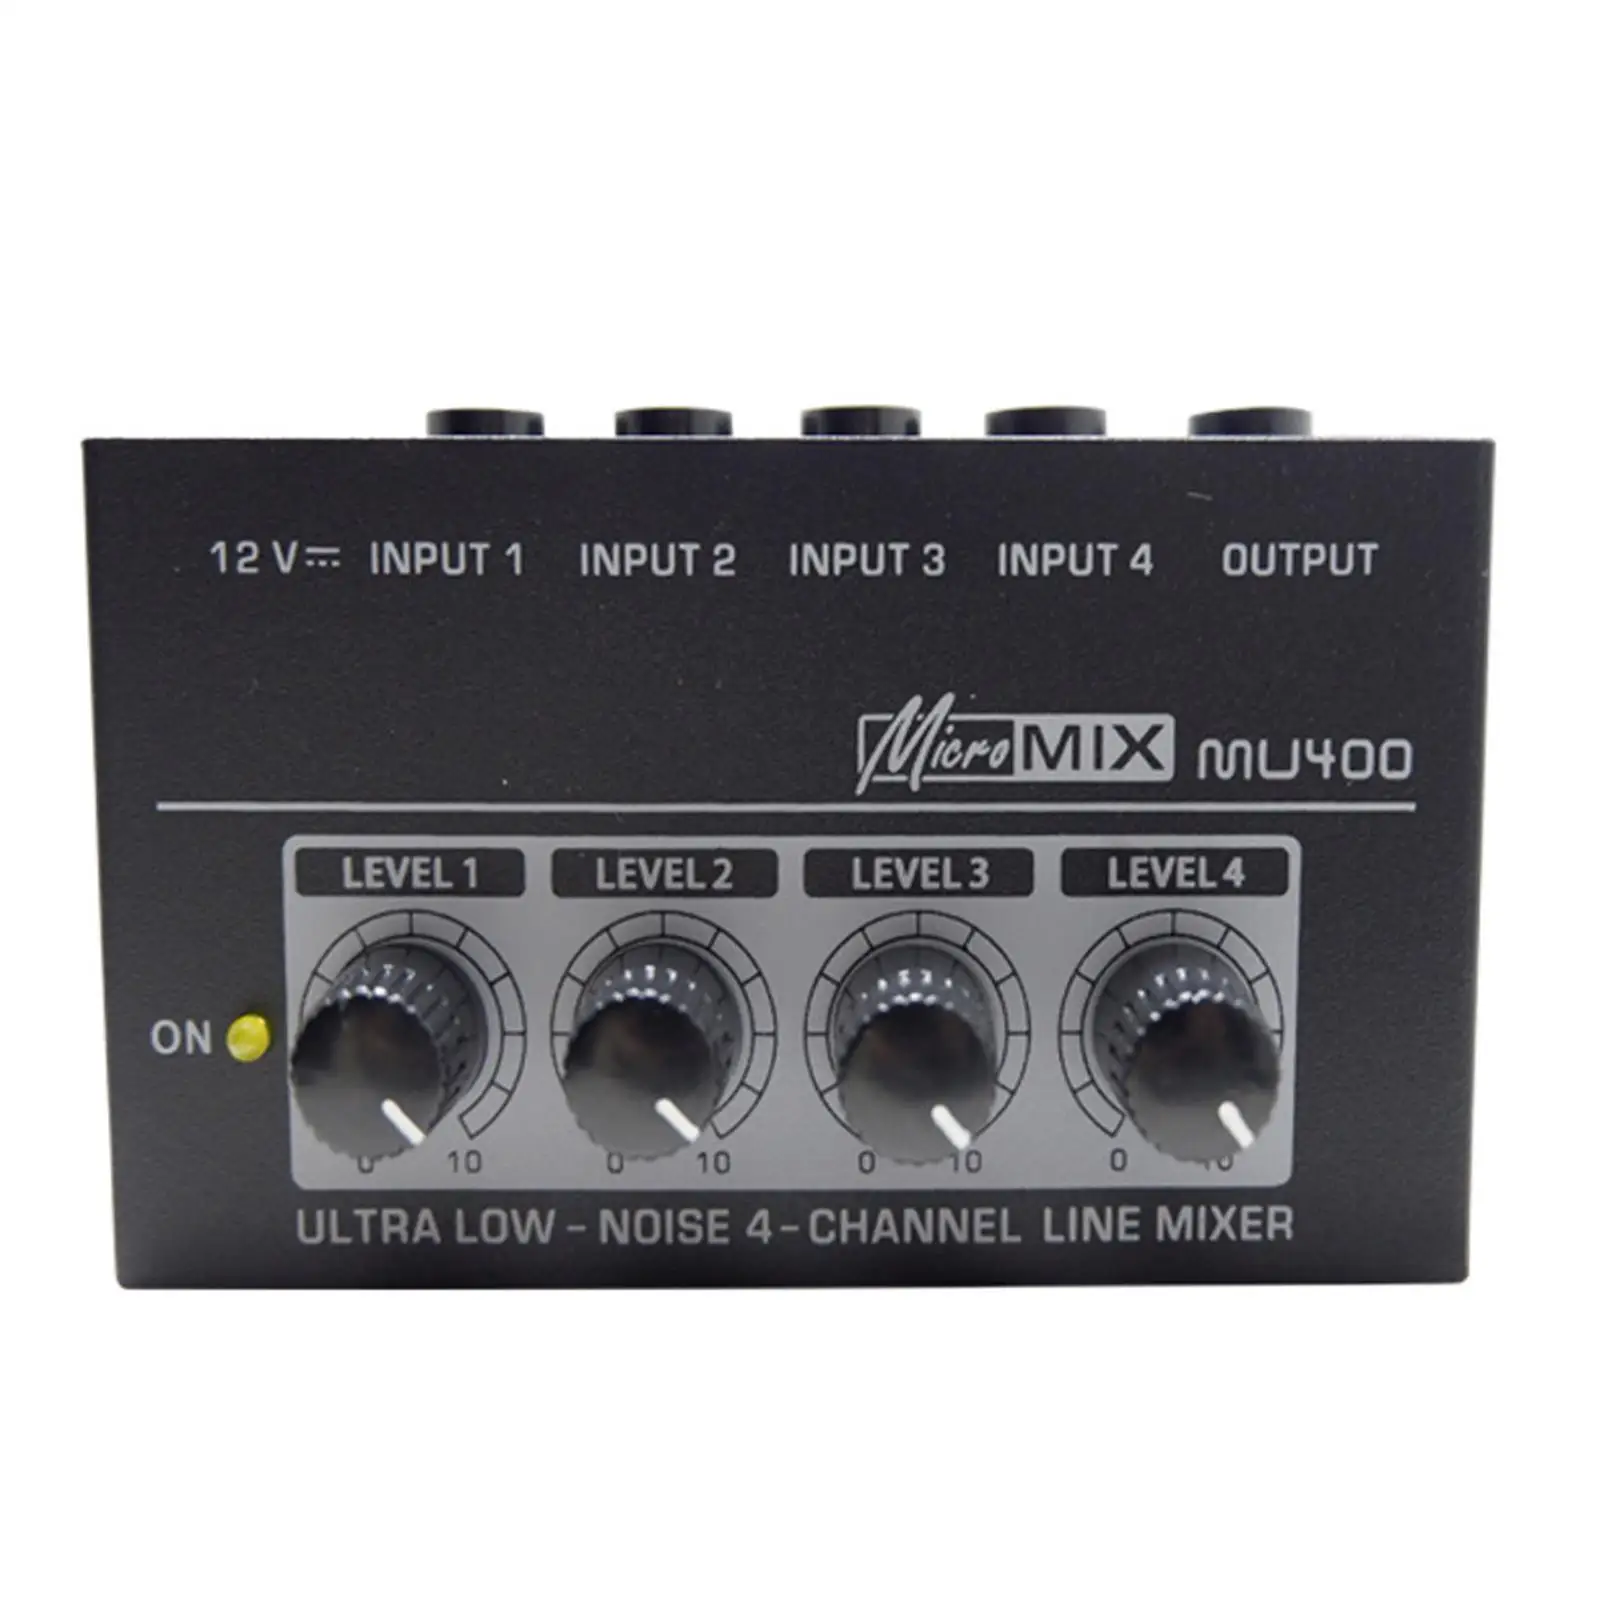 Audio Mixer Compact Stereo Mixer 12V Portable Mixer Line Mixer for Club Mixing Instrument Mobile Phone Live and Studio Recording